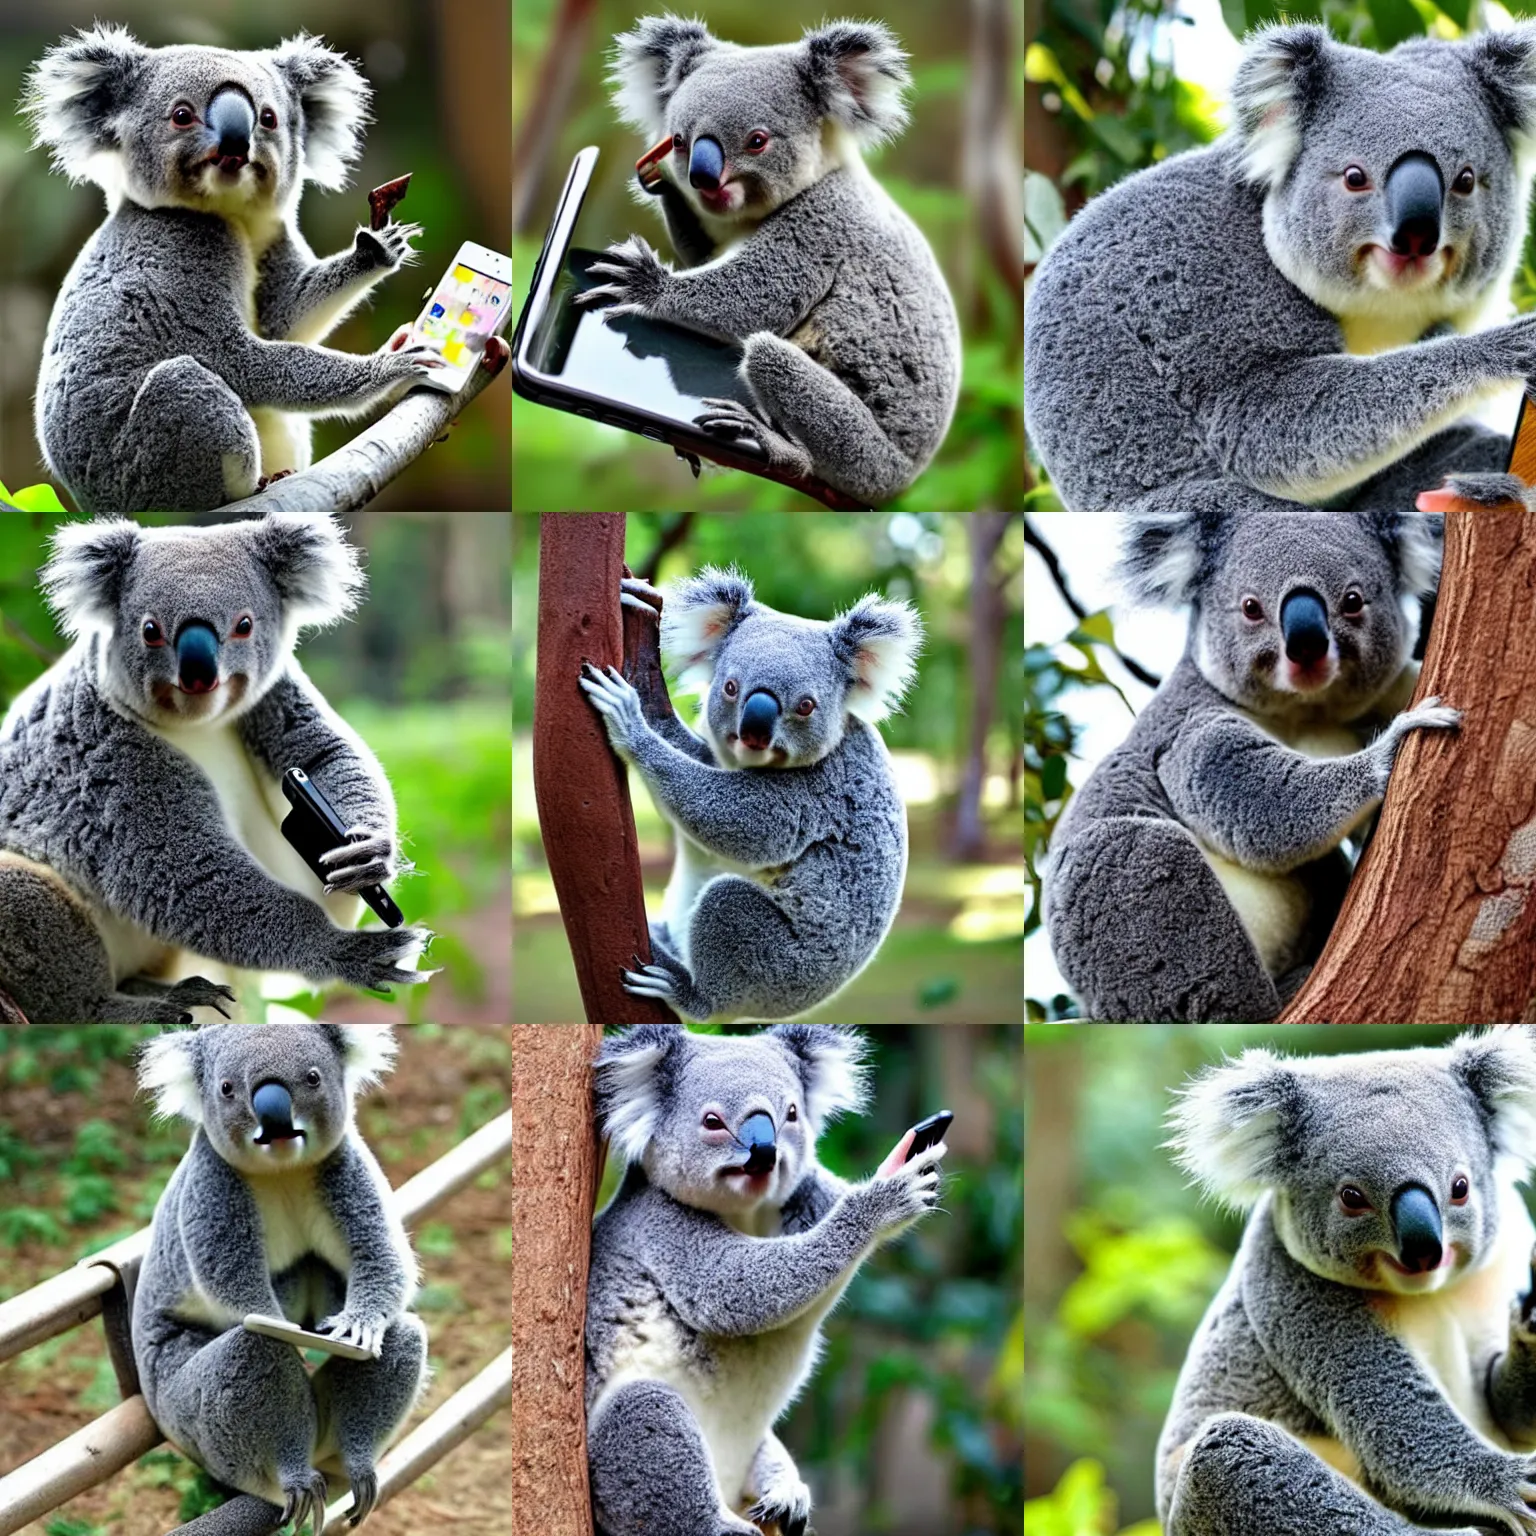 Prompt: a cute koala using mobile phone